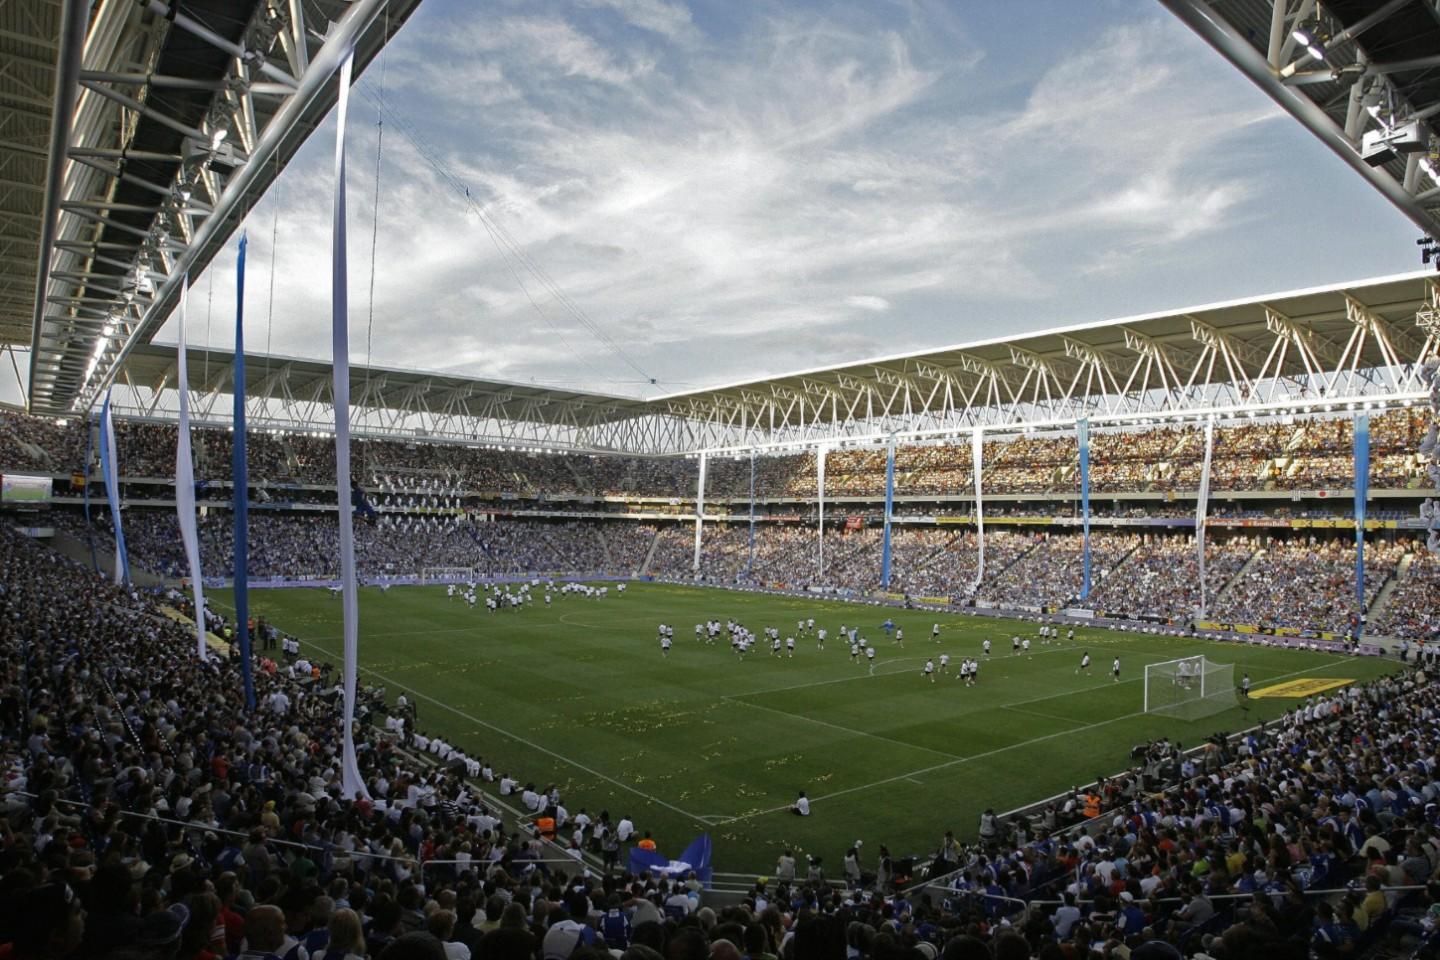 Biglietti Espanyol | Compra o Vendi Biglietti per Espanyol 2020 - viagogo1440 x 960